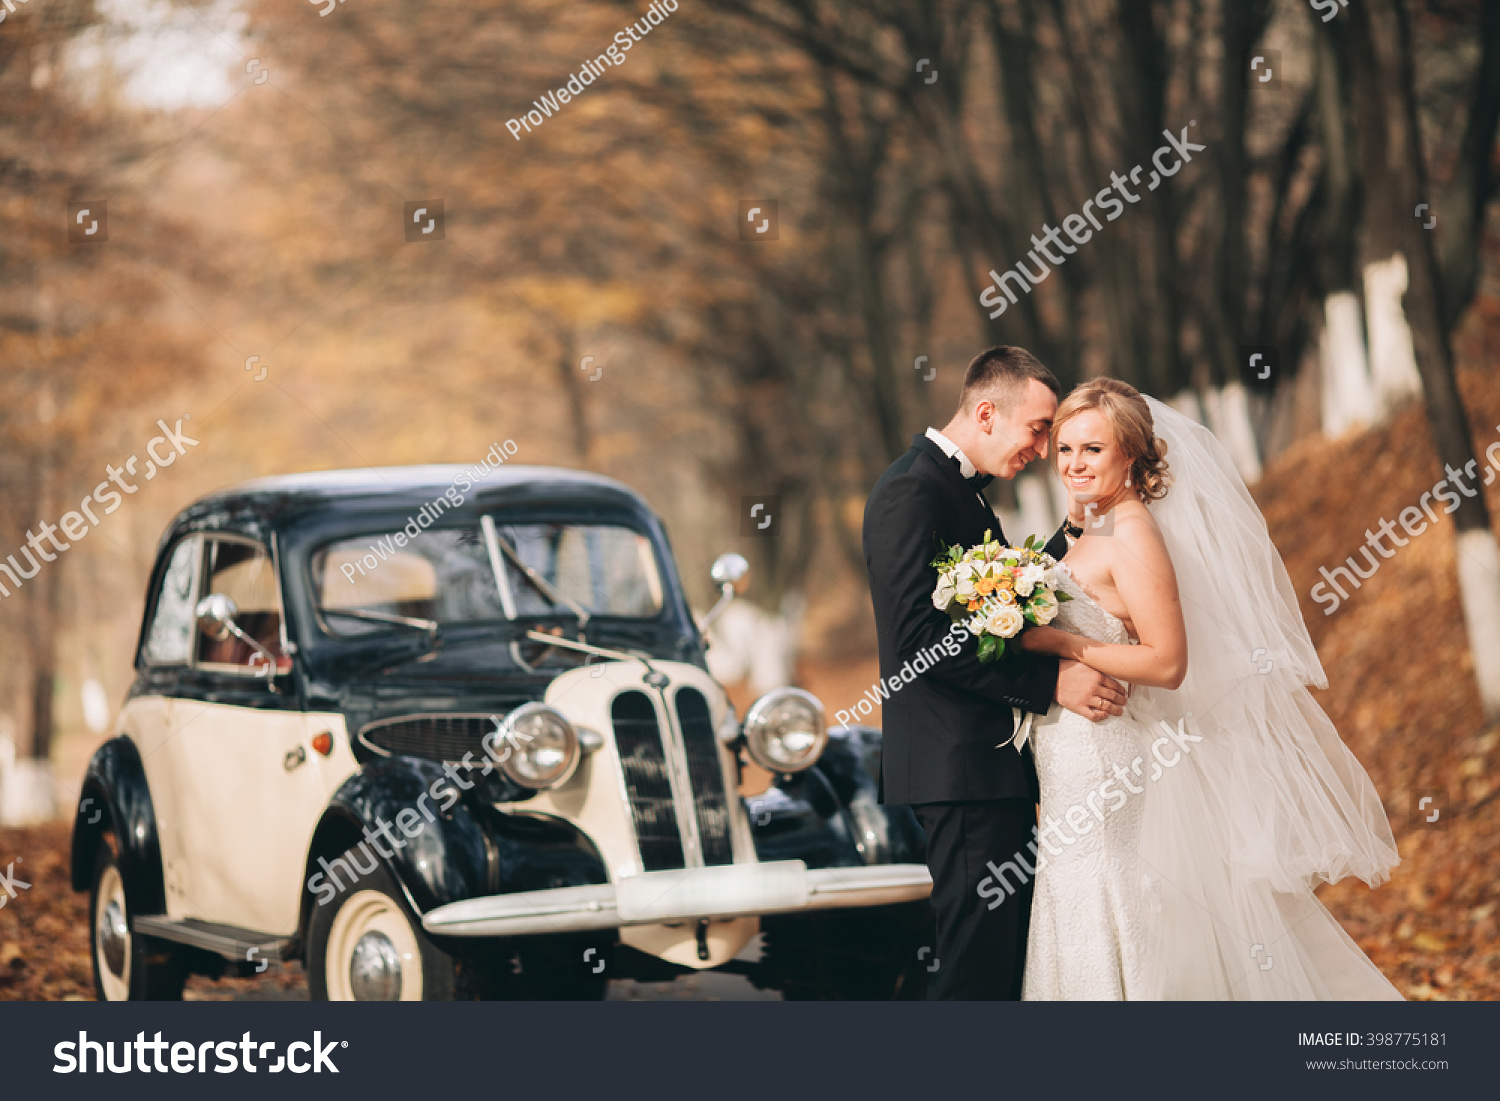 Stylish wedding couple, bride, groom kissing and hugging near retro car in autumn #398775181